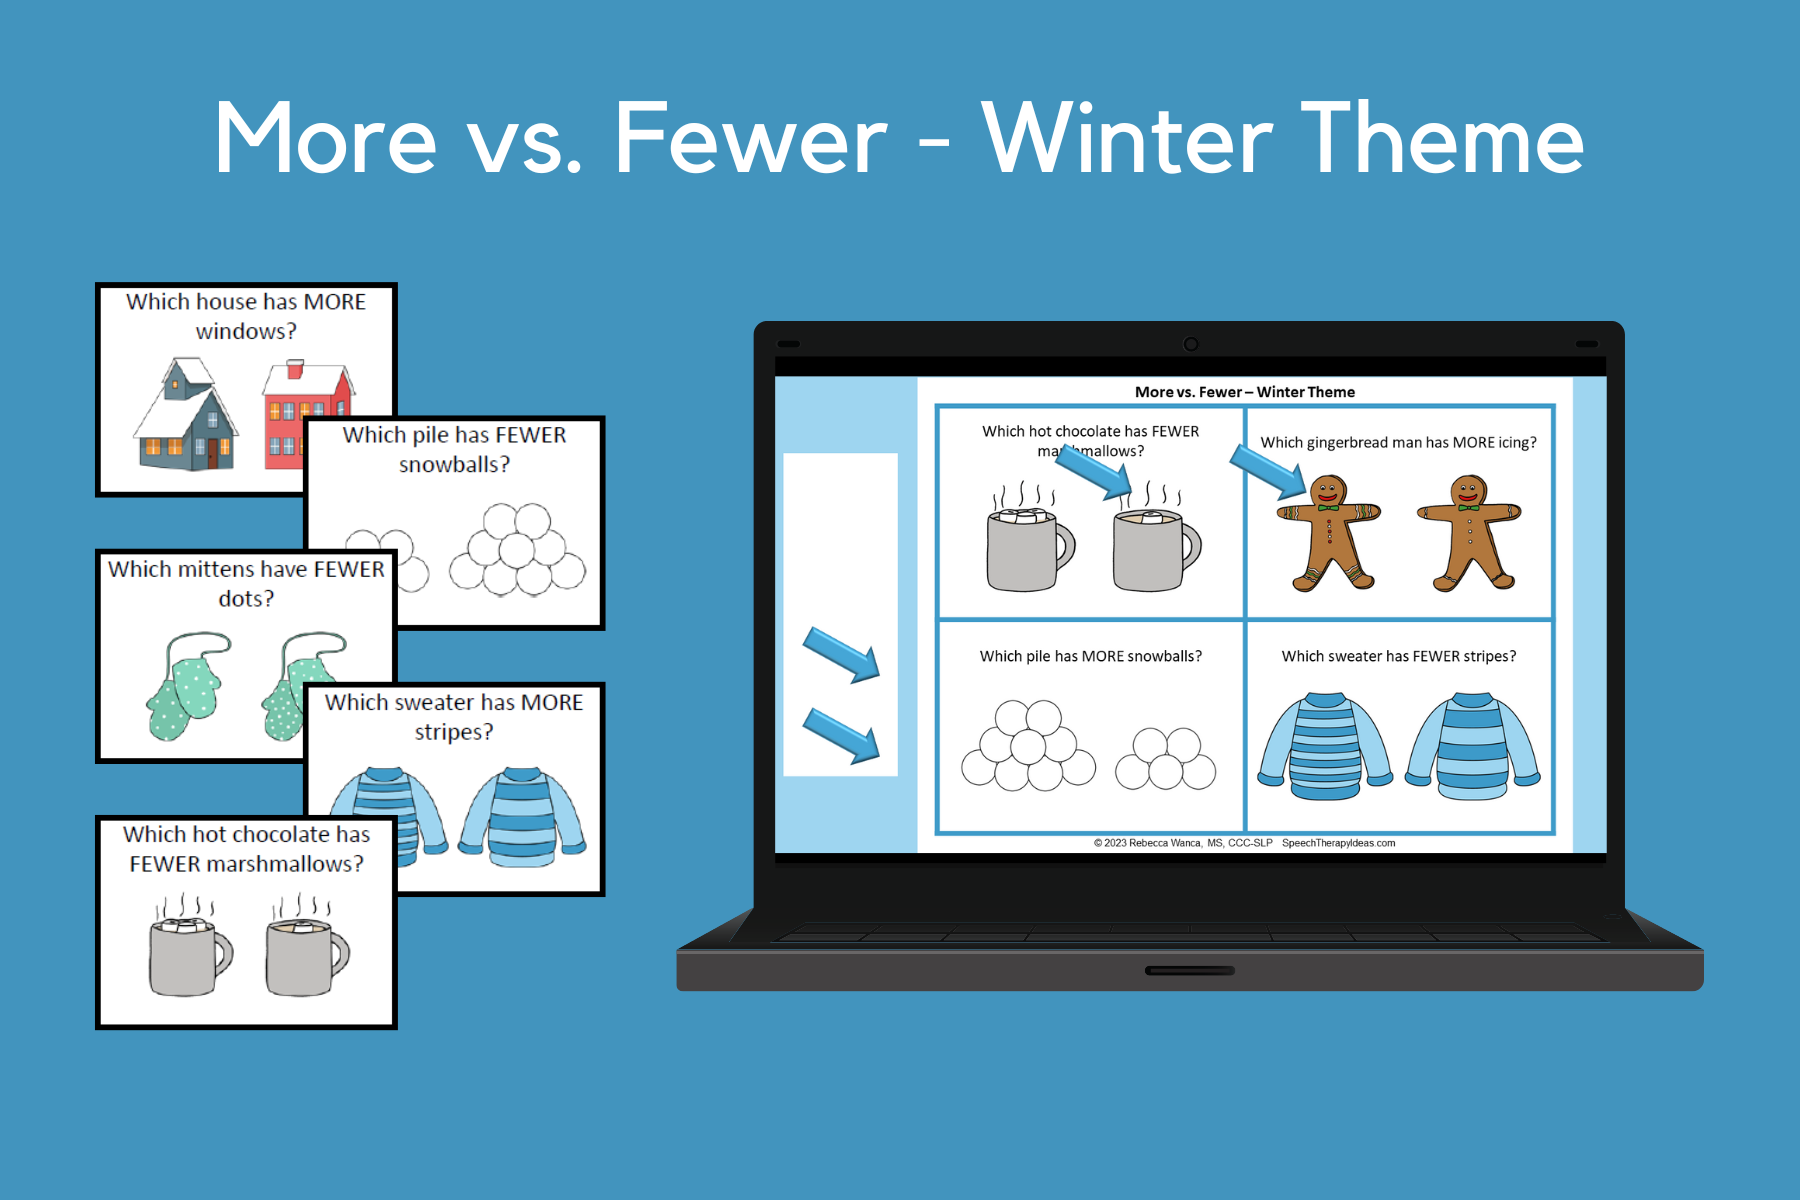 More vs. Fewer – Winter Theme